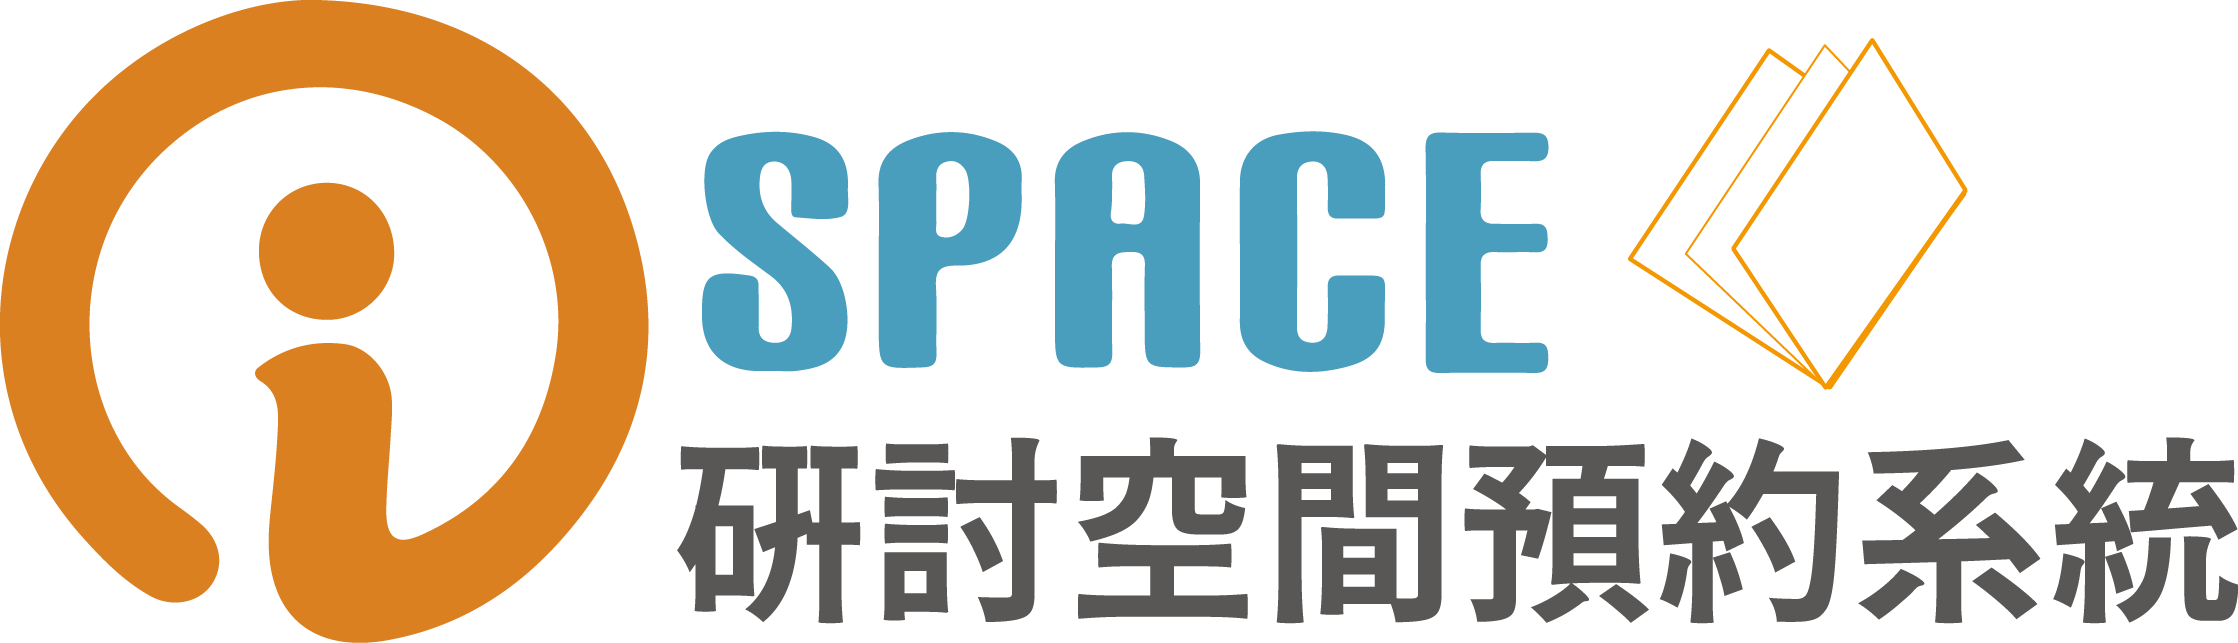 ispace智慧化研討空間預約系統